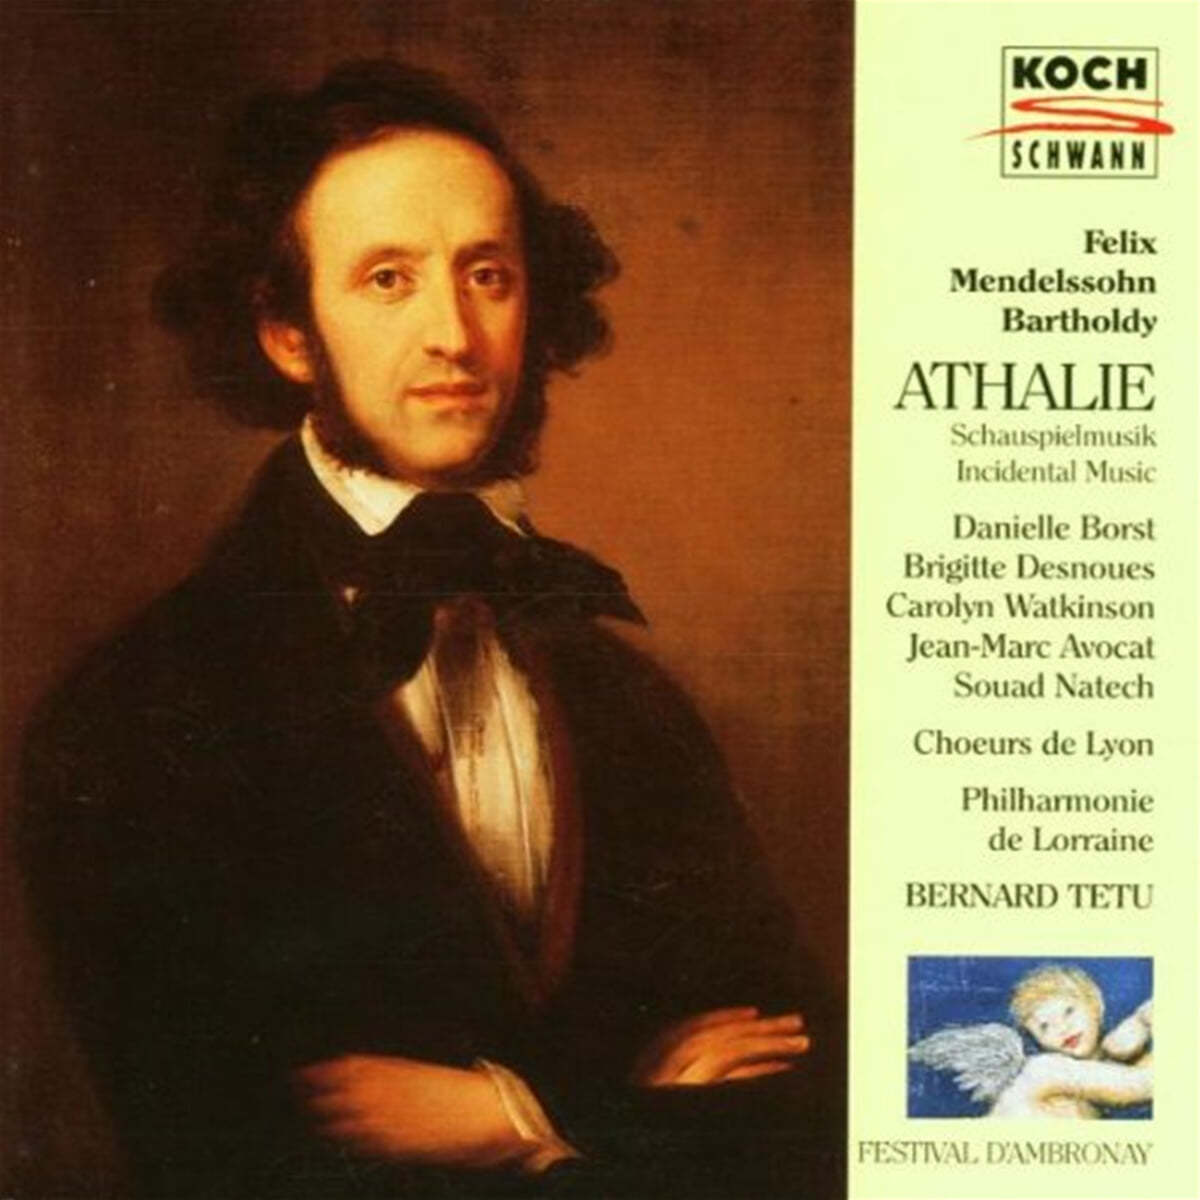 Bernard Tetu 멘델스존: 아탈리 (Mendelssohn: Athalie Op.74) 